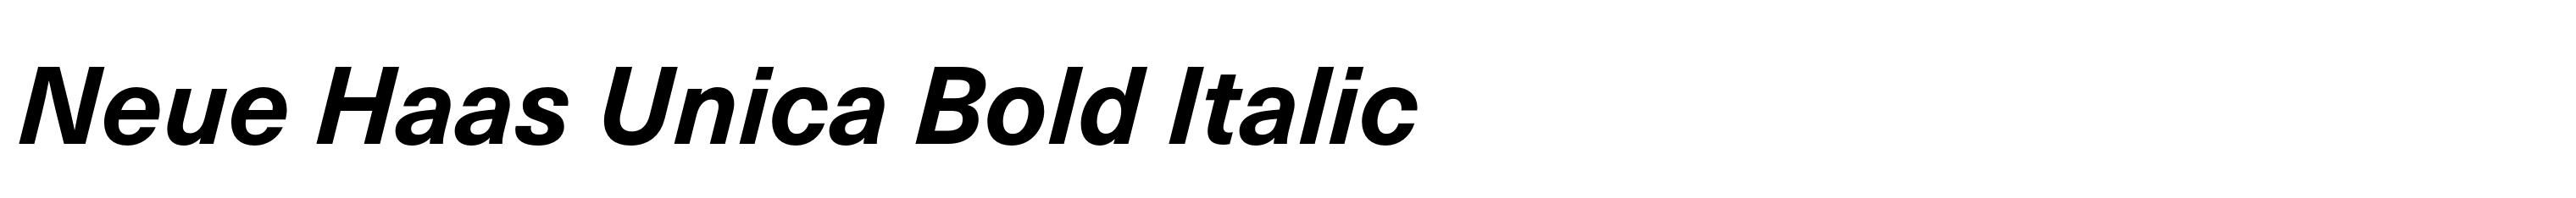 Neue Haas Unica Bold Italic